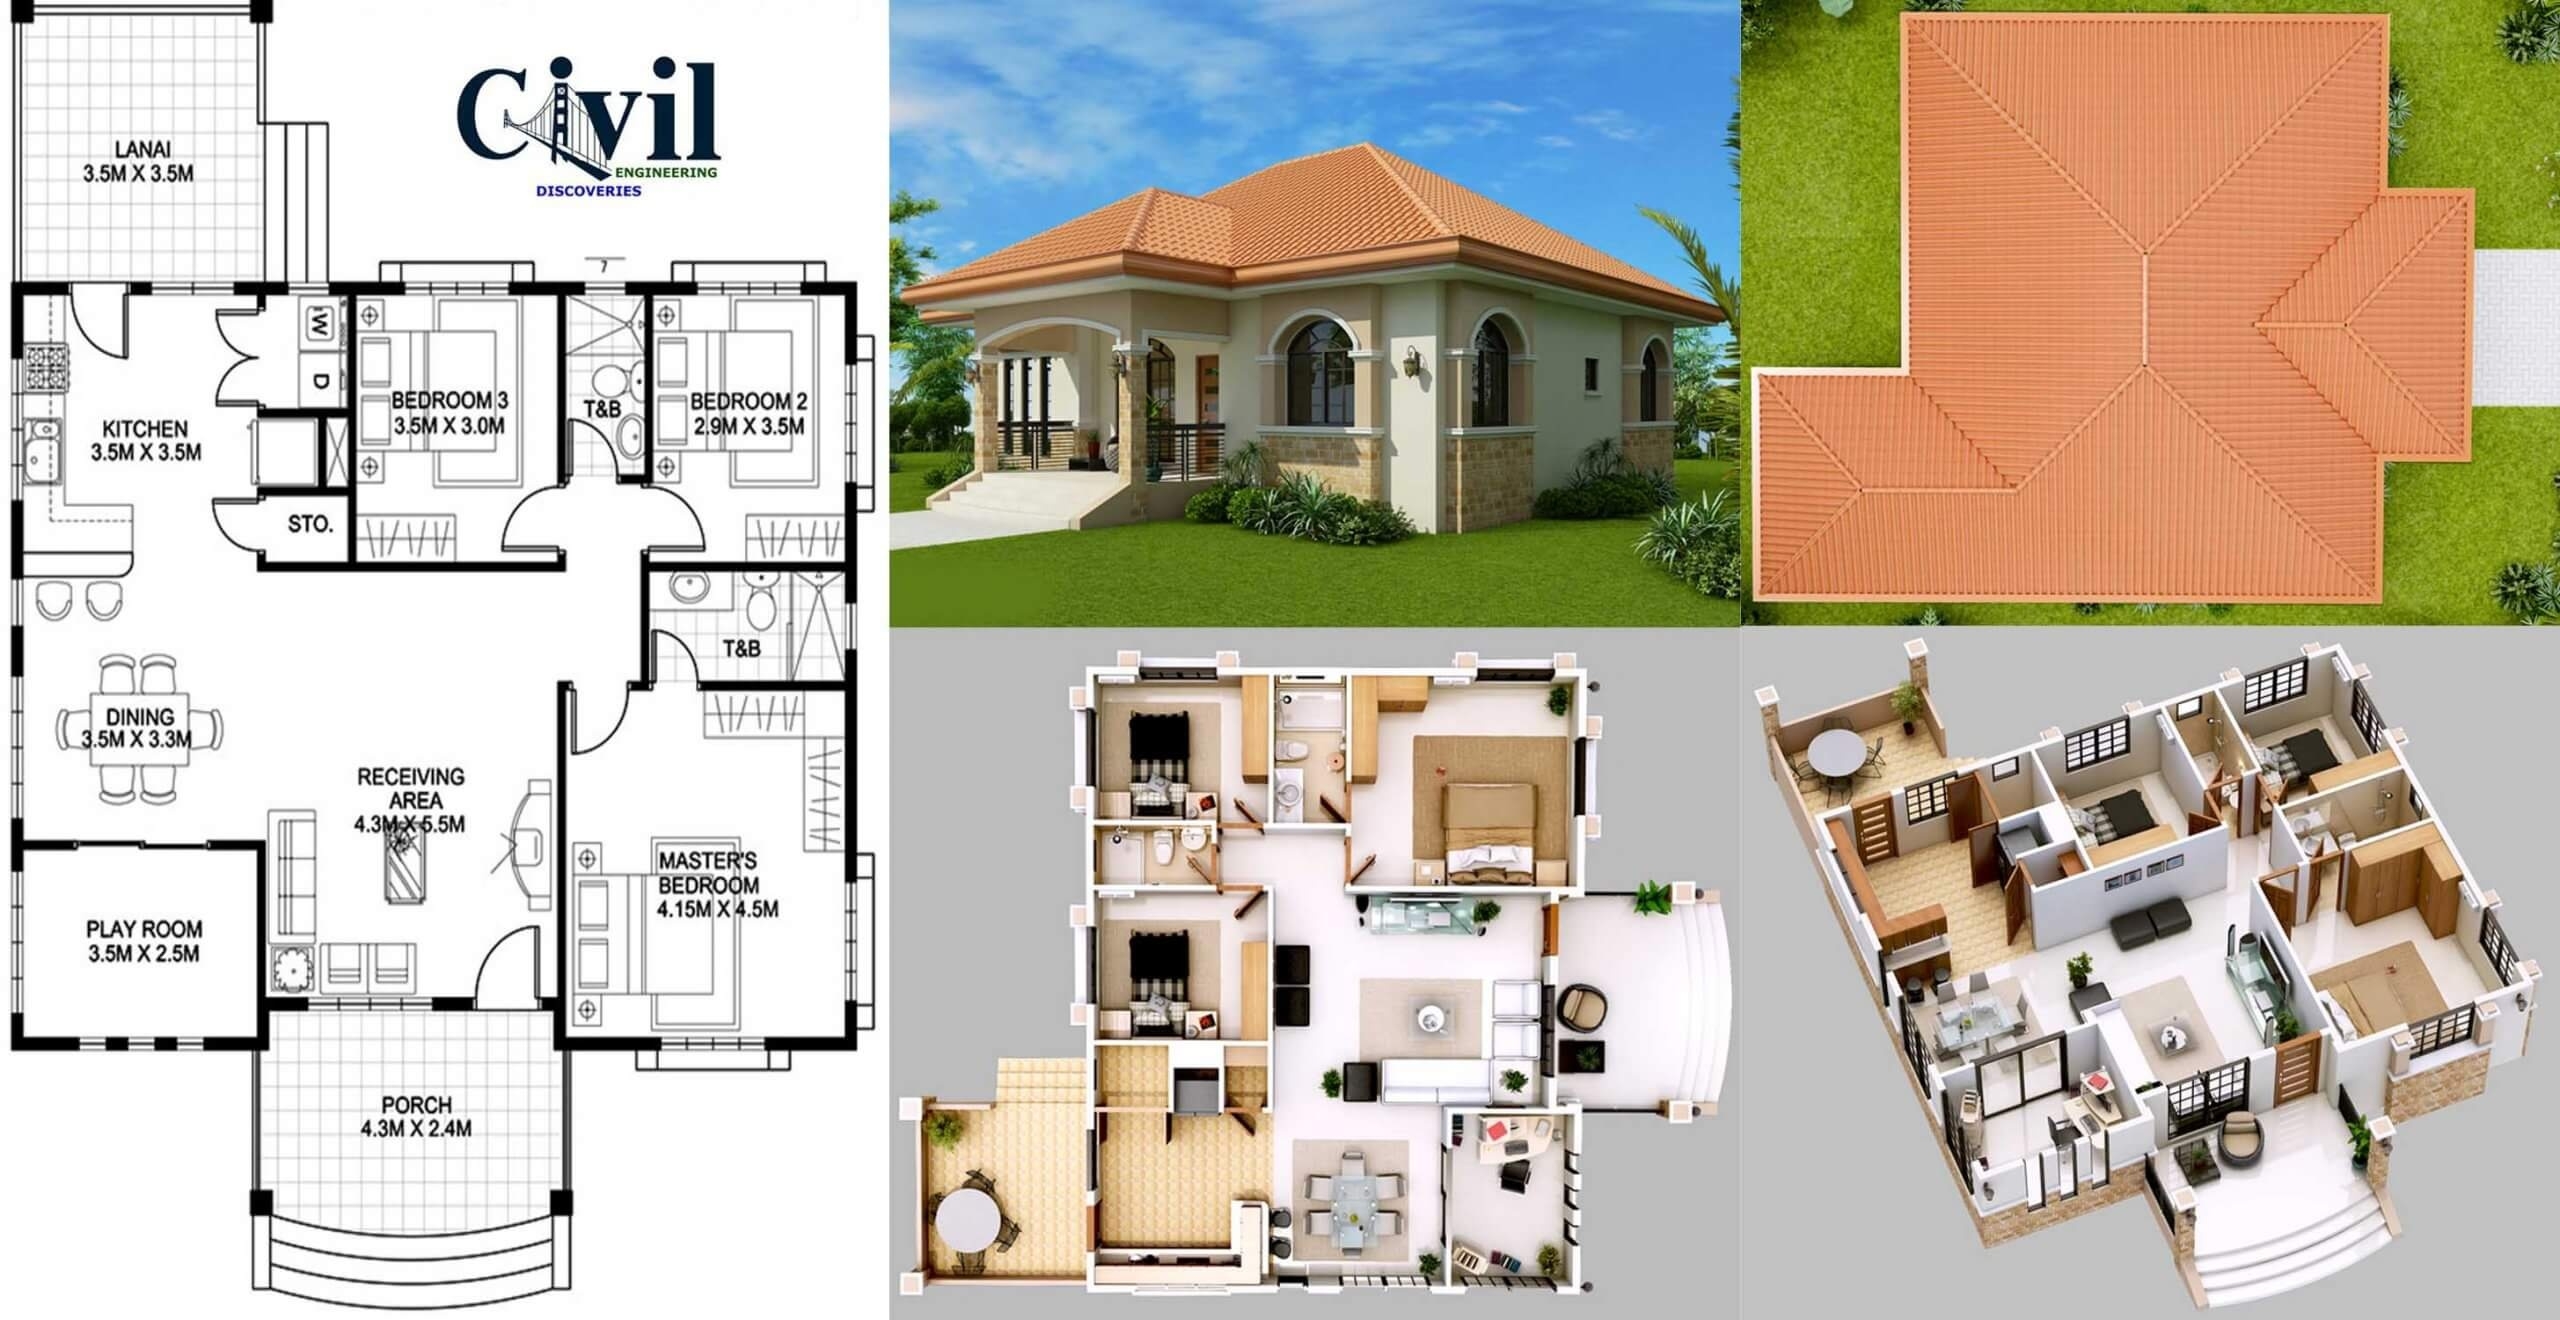 Outstanding three bedroom bungalow house design | engineering discoveries in gorgeous 3bedroom bungalow floor plan